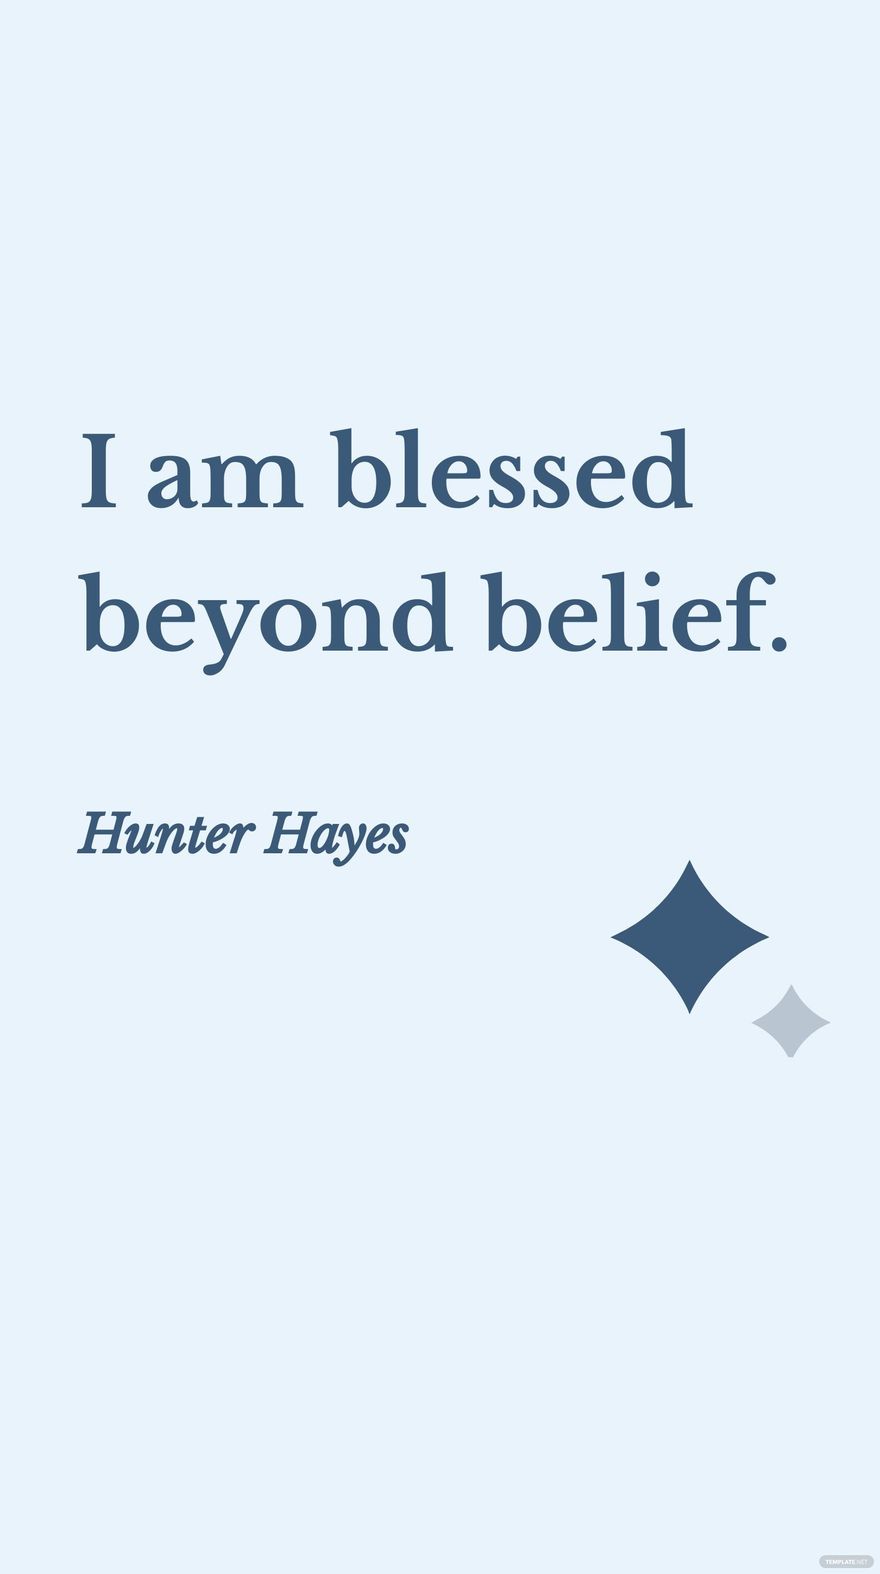 Free Hunter Hayes - I am blessed beyond belief. in JPG